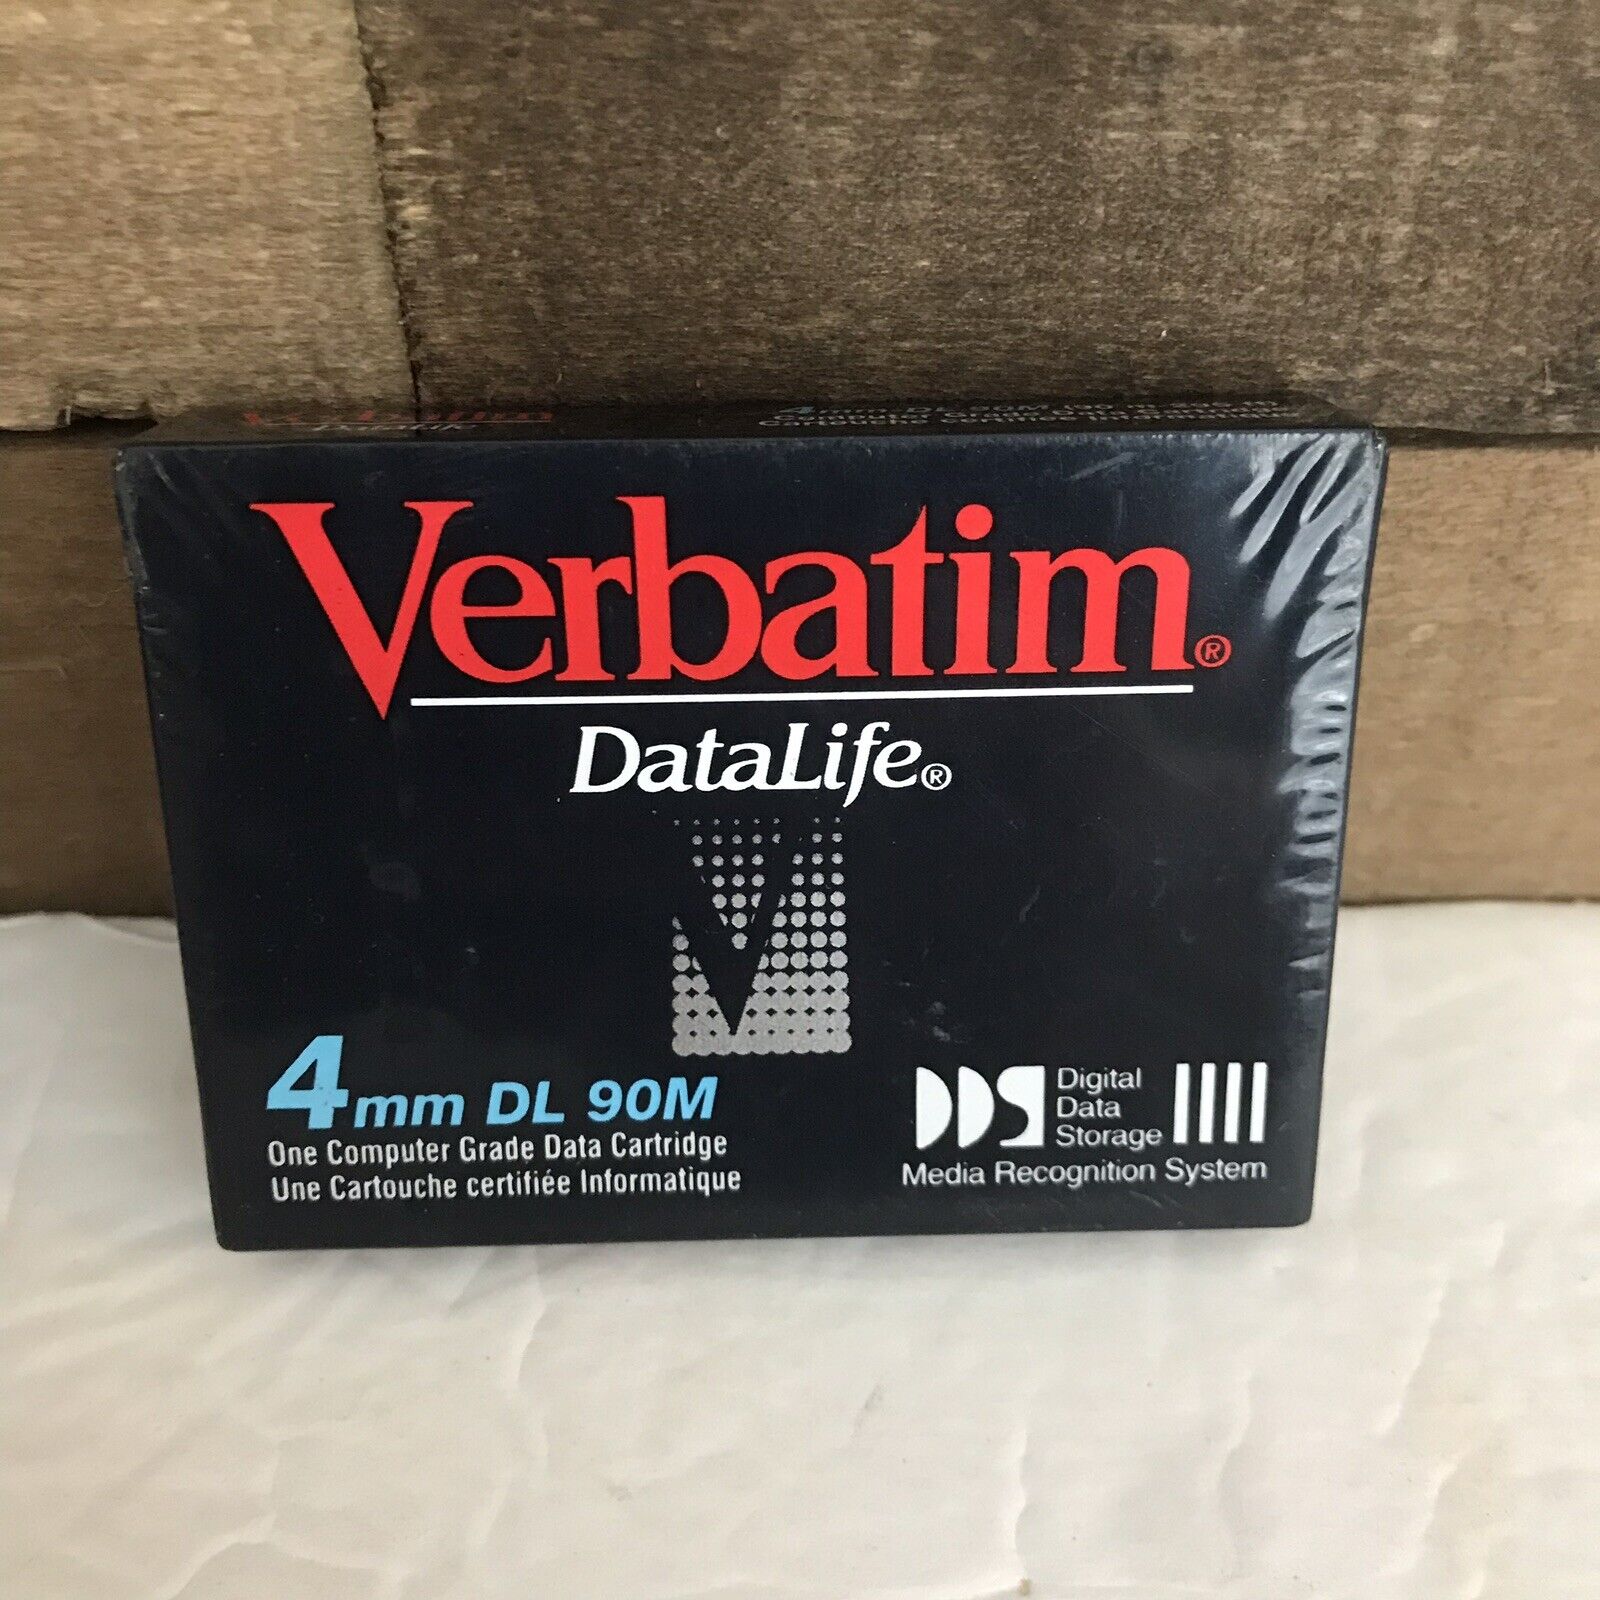 Verbatim DataLife 4mm DL 90M Digital, Data Storage Tape Cartridge Factory Sealed